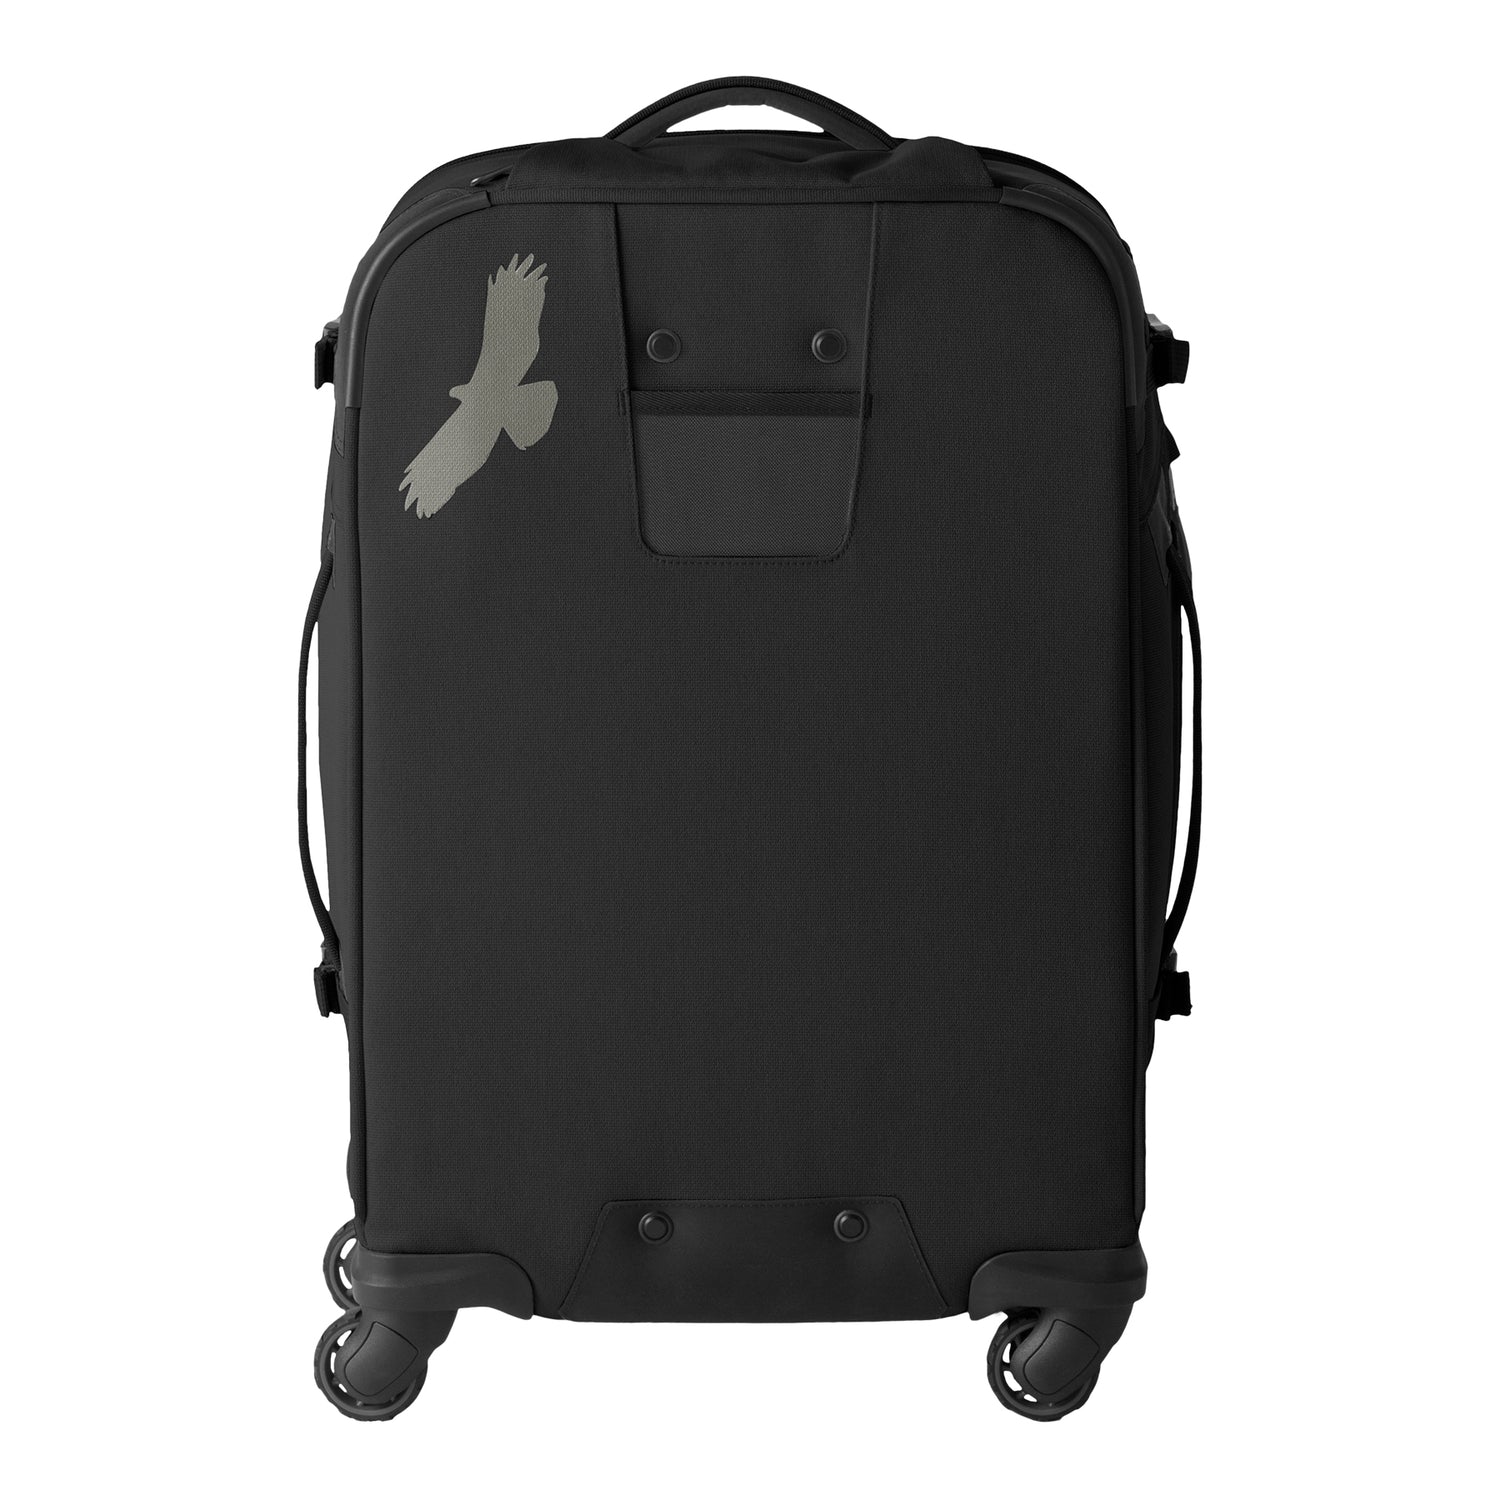 Gear Warrior XE 4-Wheel Carry-On Luggage - BLACK